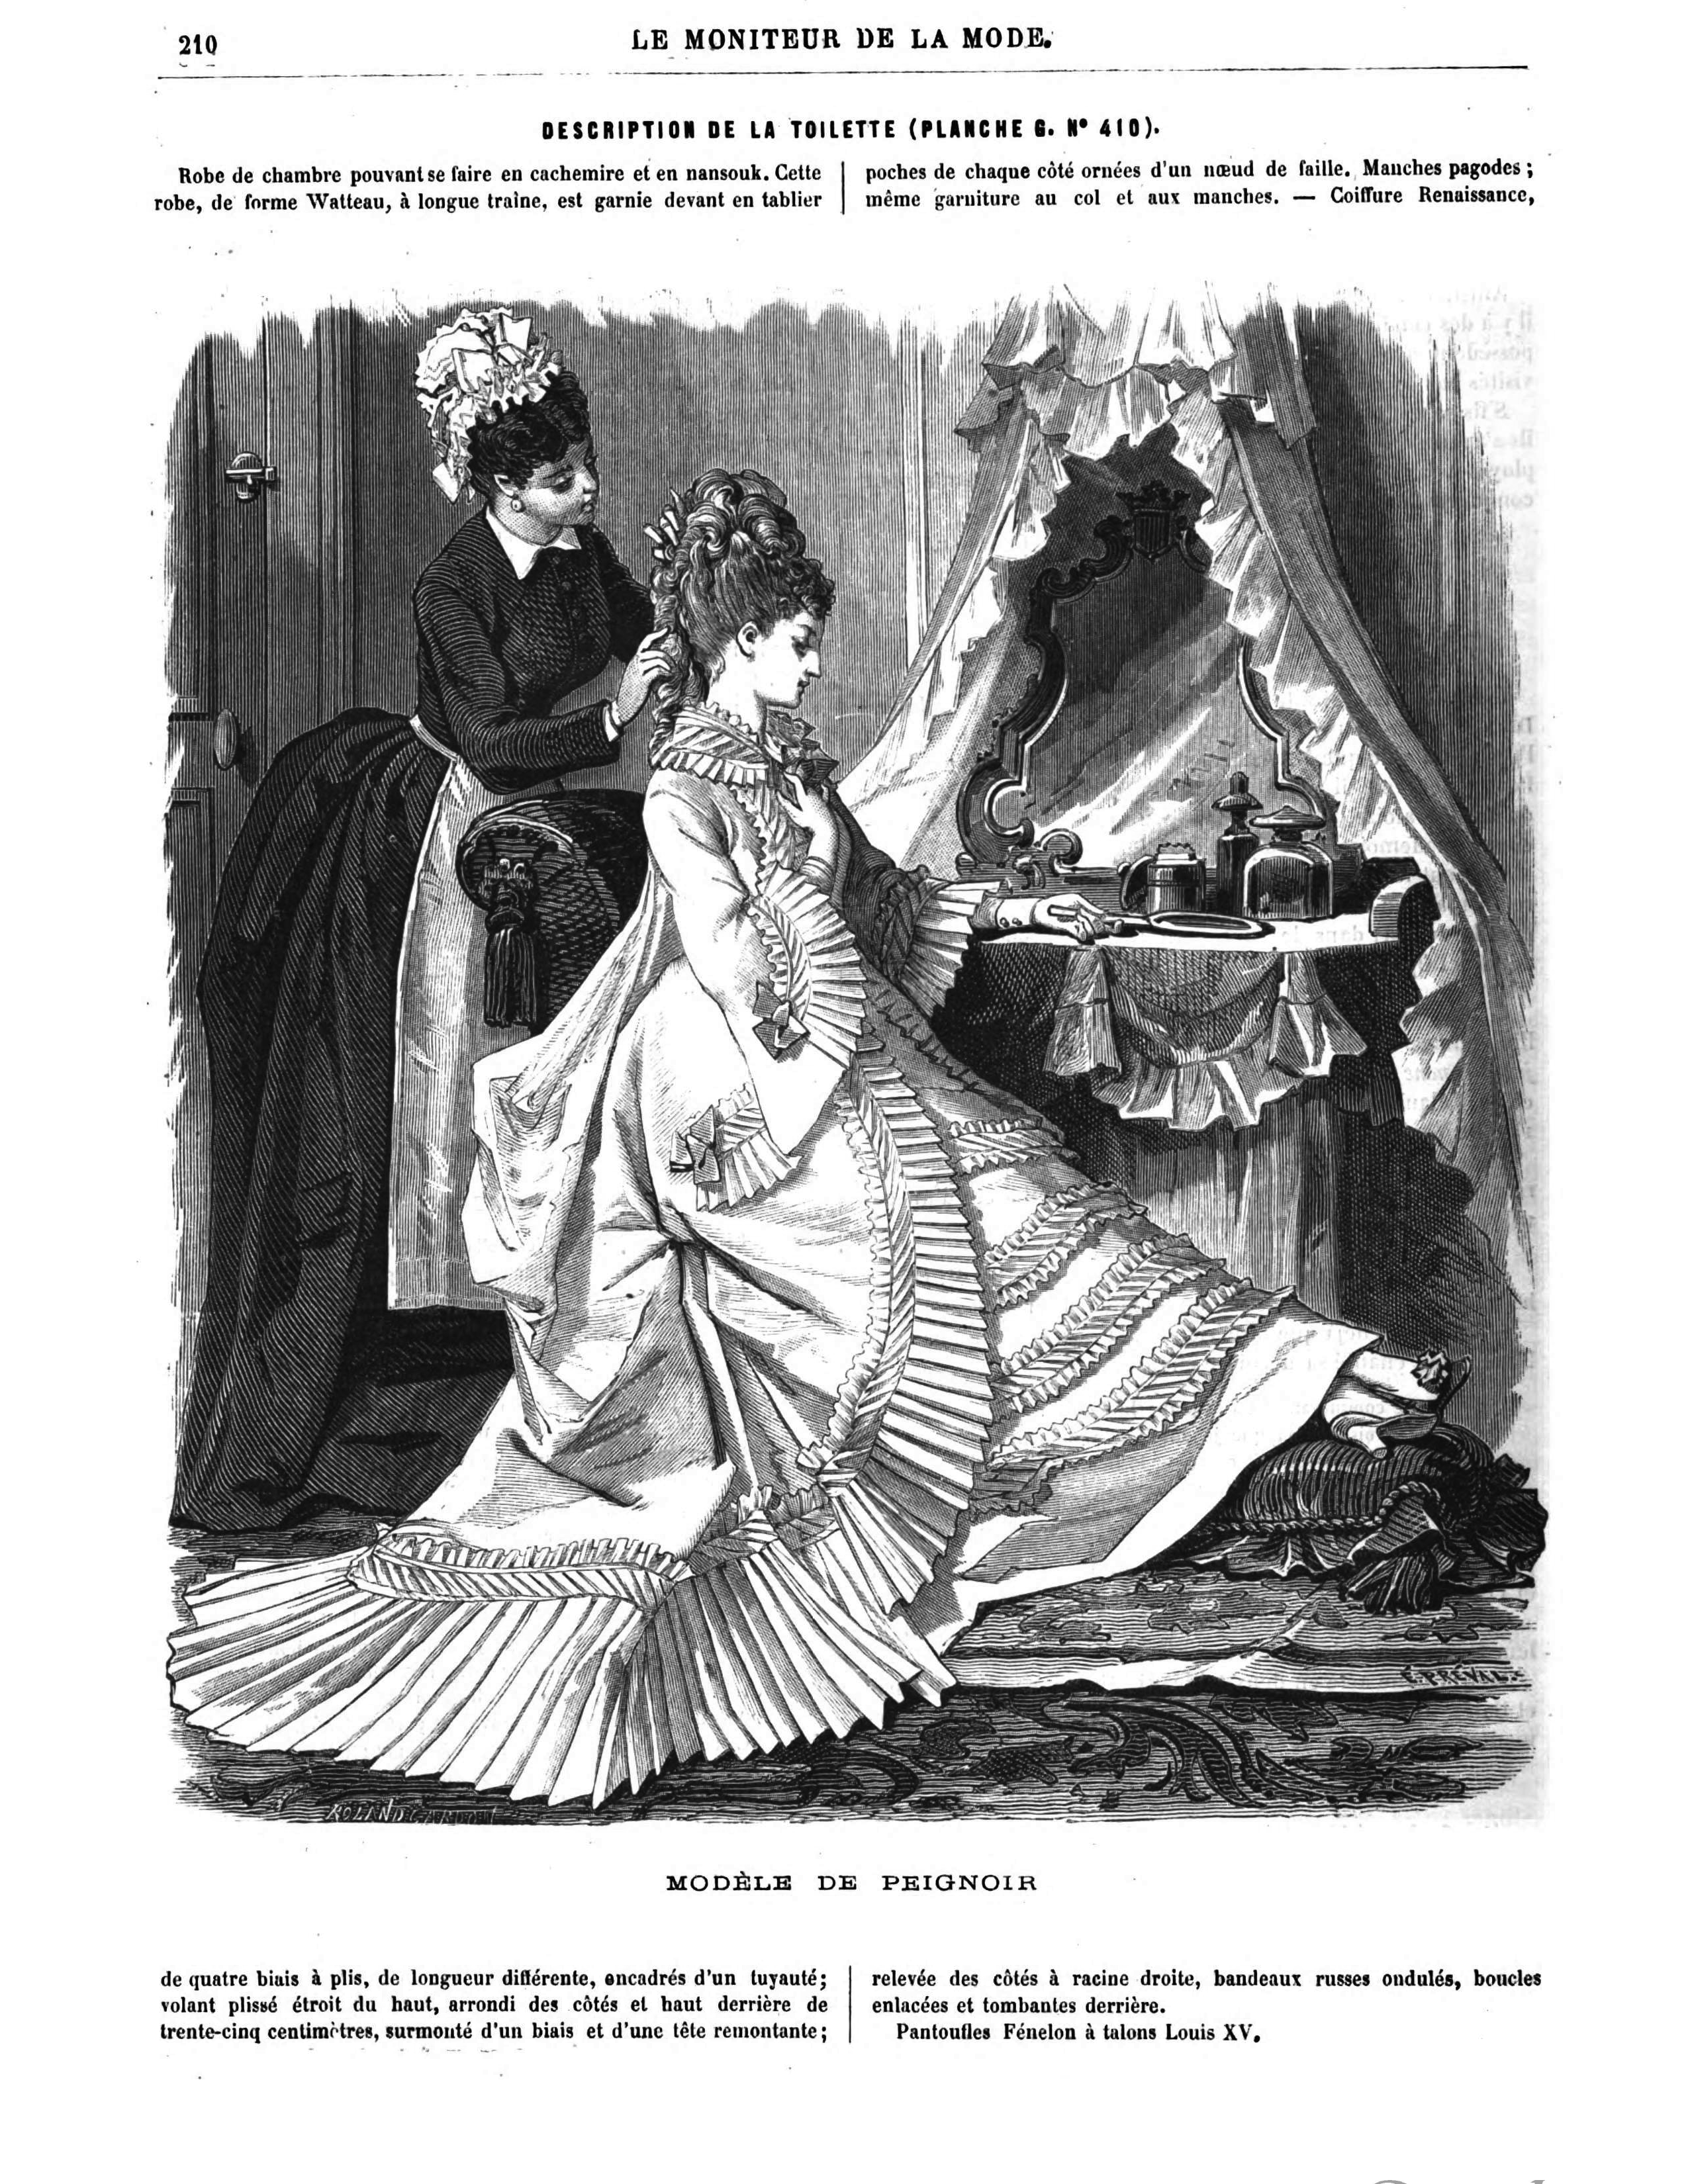 File:Catalogue-malle-lit 1892.jpg - Wikimedia Commons